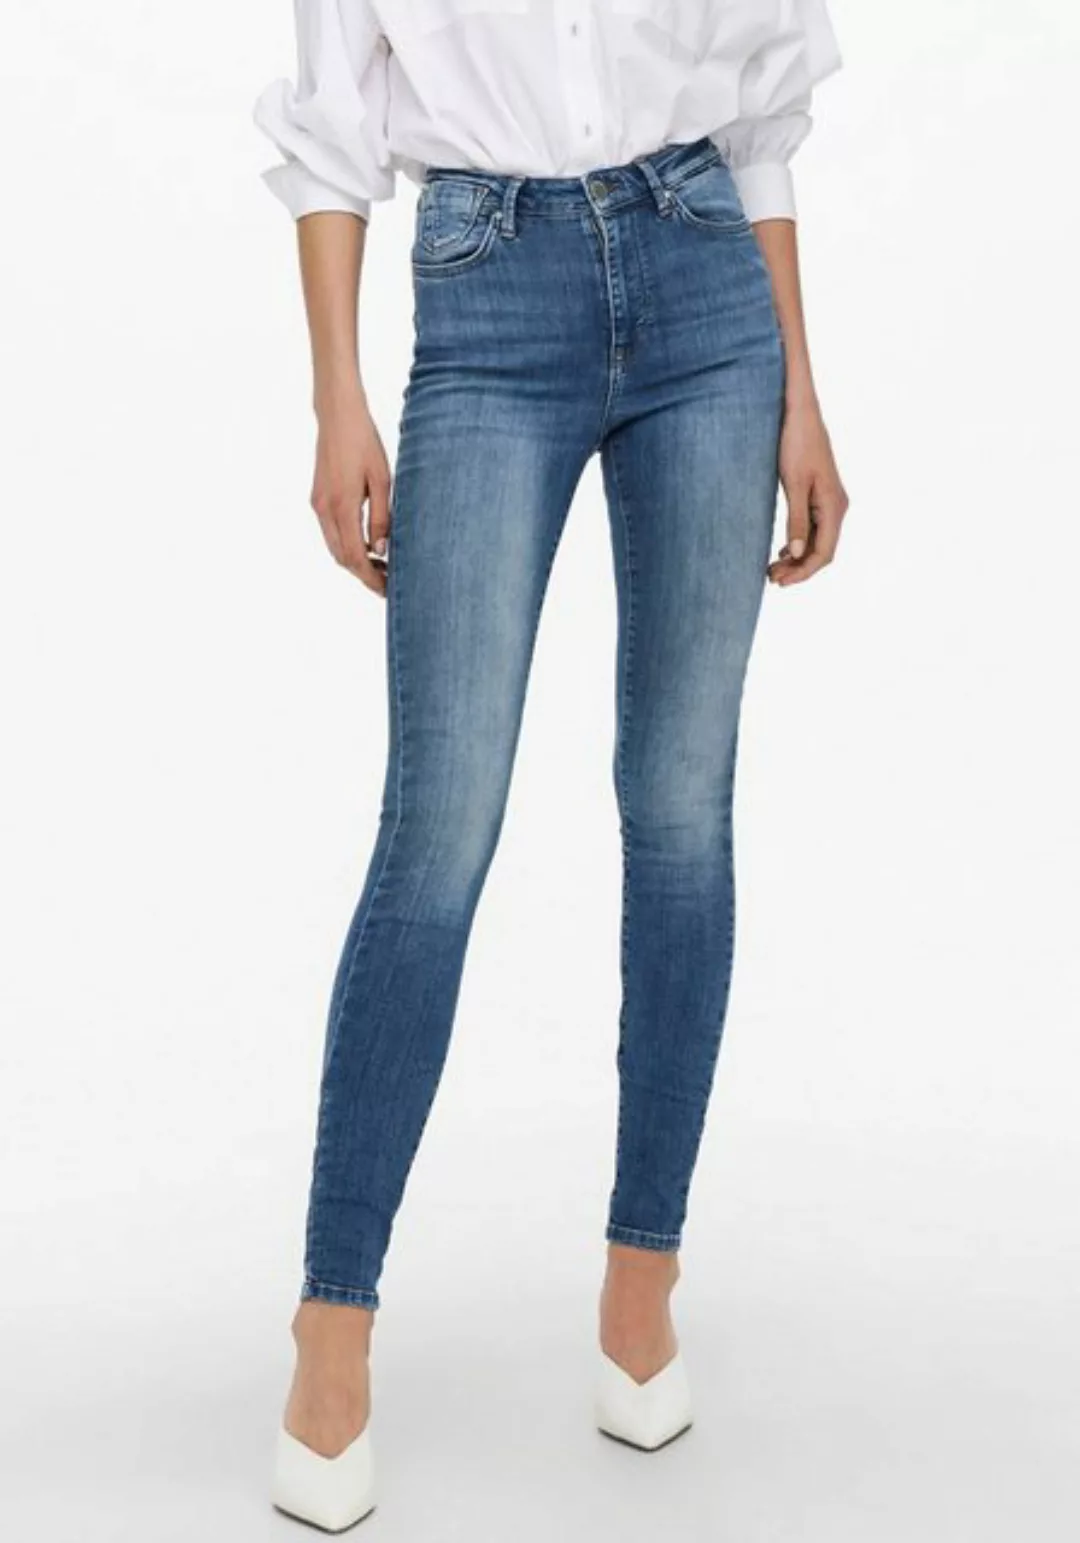 Only Damen Jeans ONLFOREVER REA958 - Skinny Fit - Blau - Medium Blue Denim günstig online kaufen